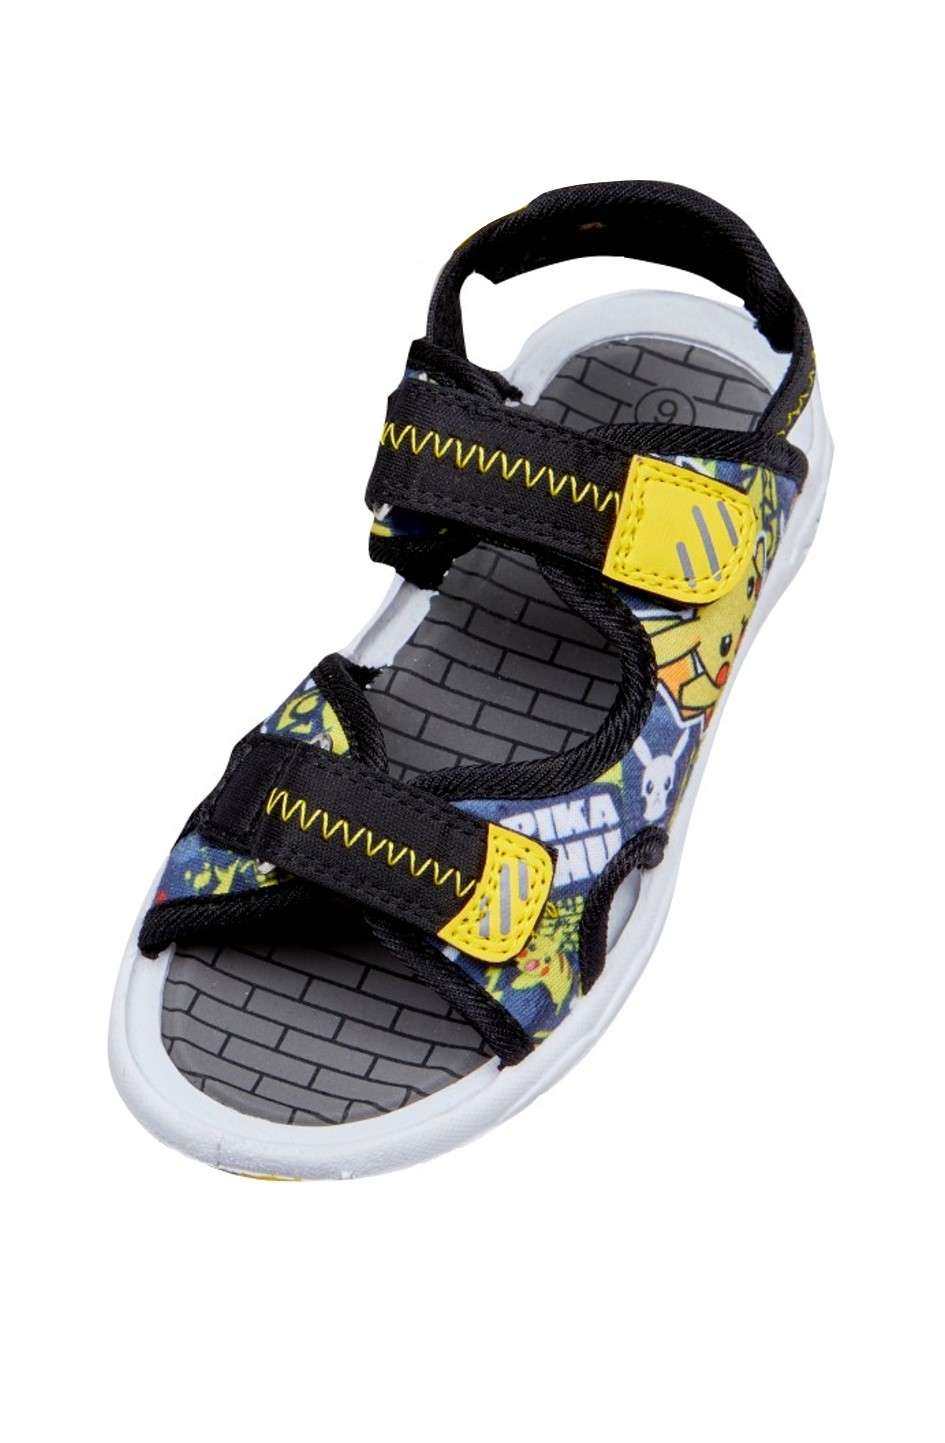 Pokémon Boys Black and Yellow Sports Sandals